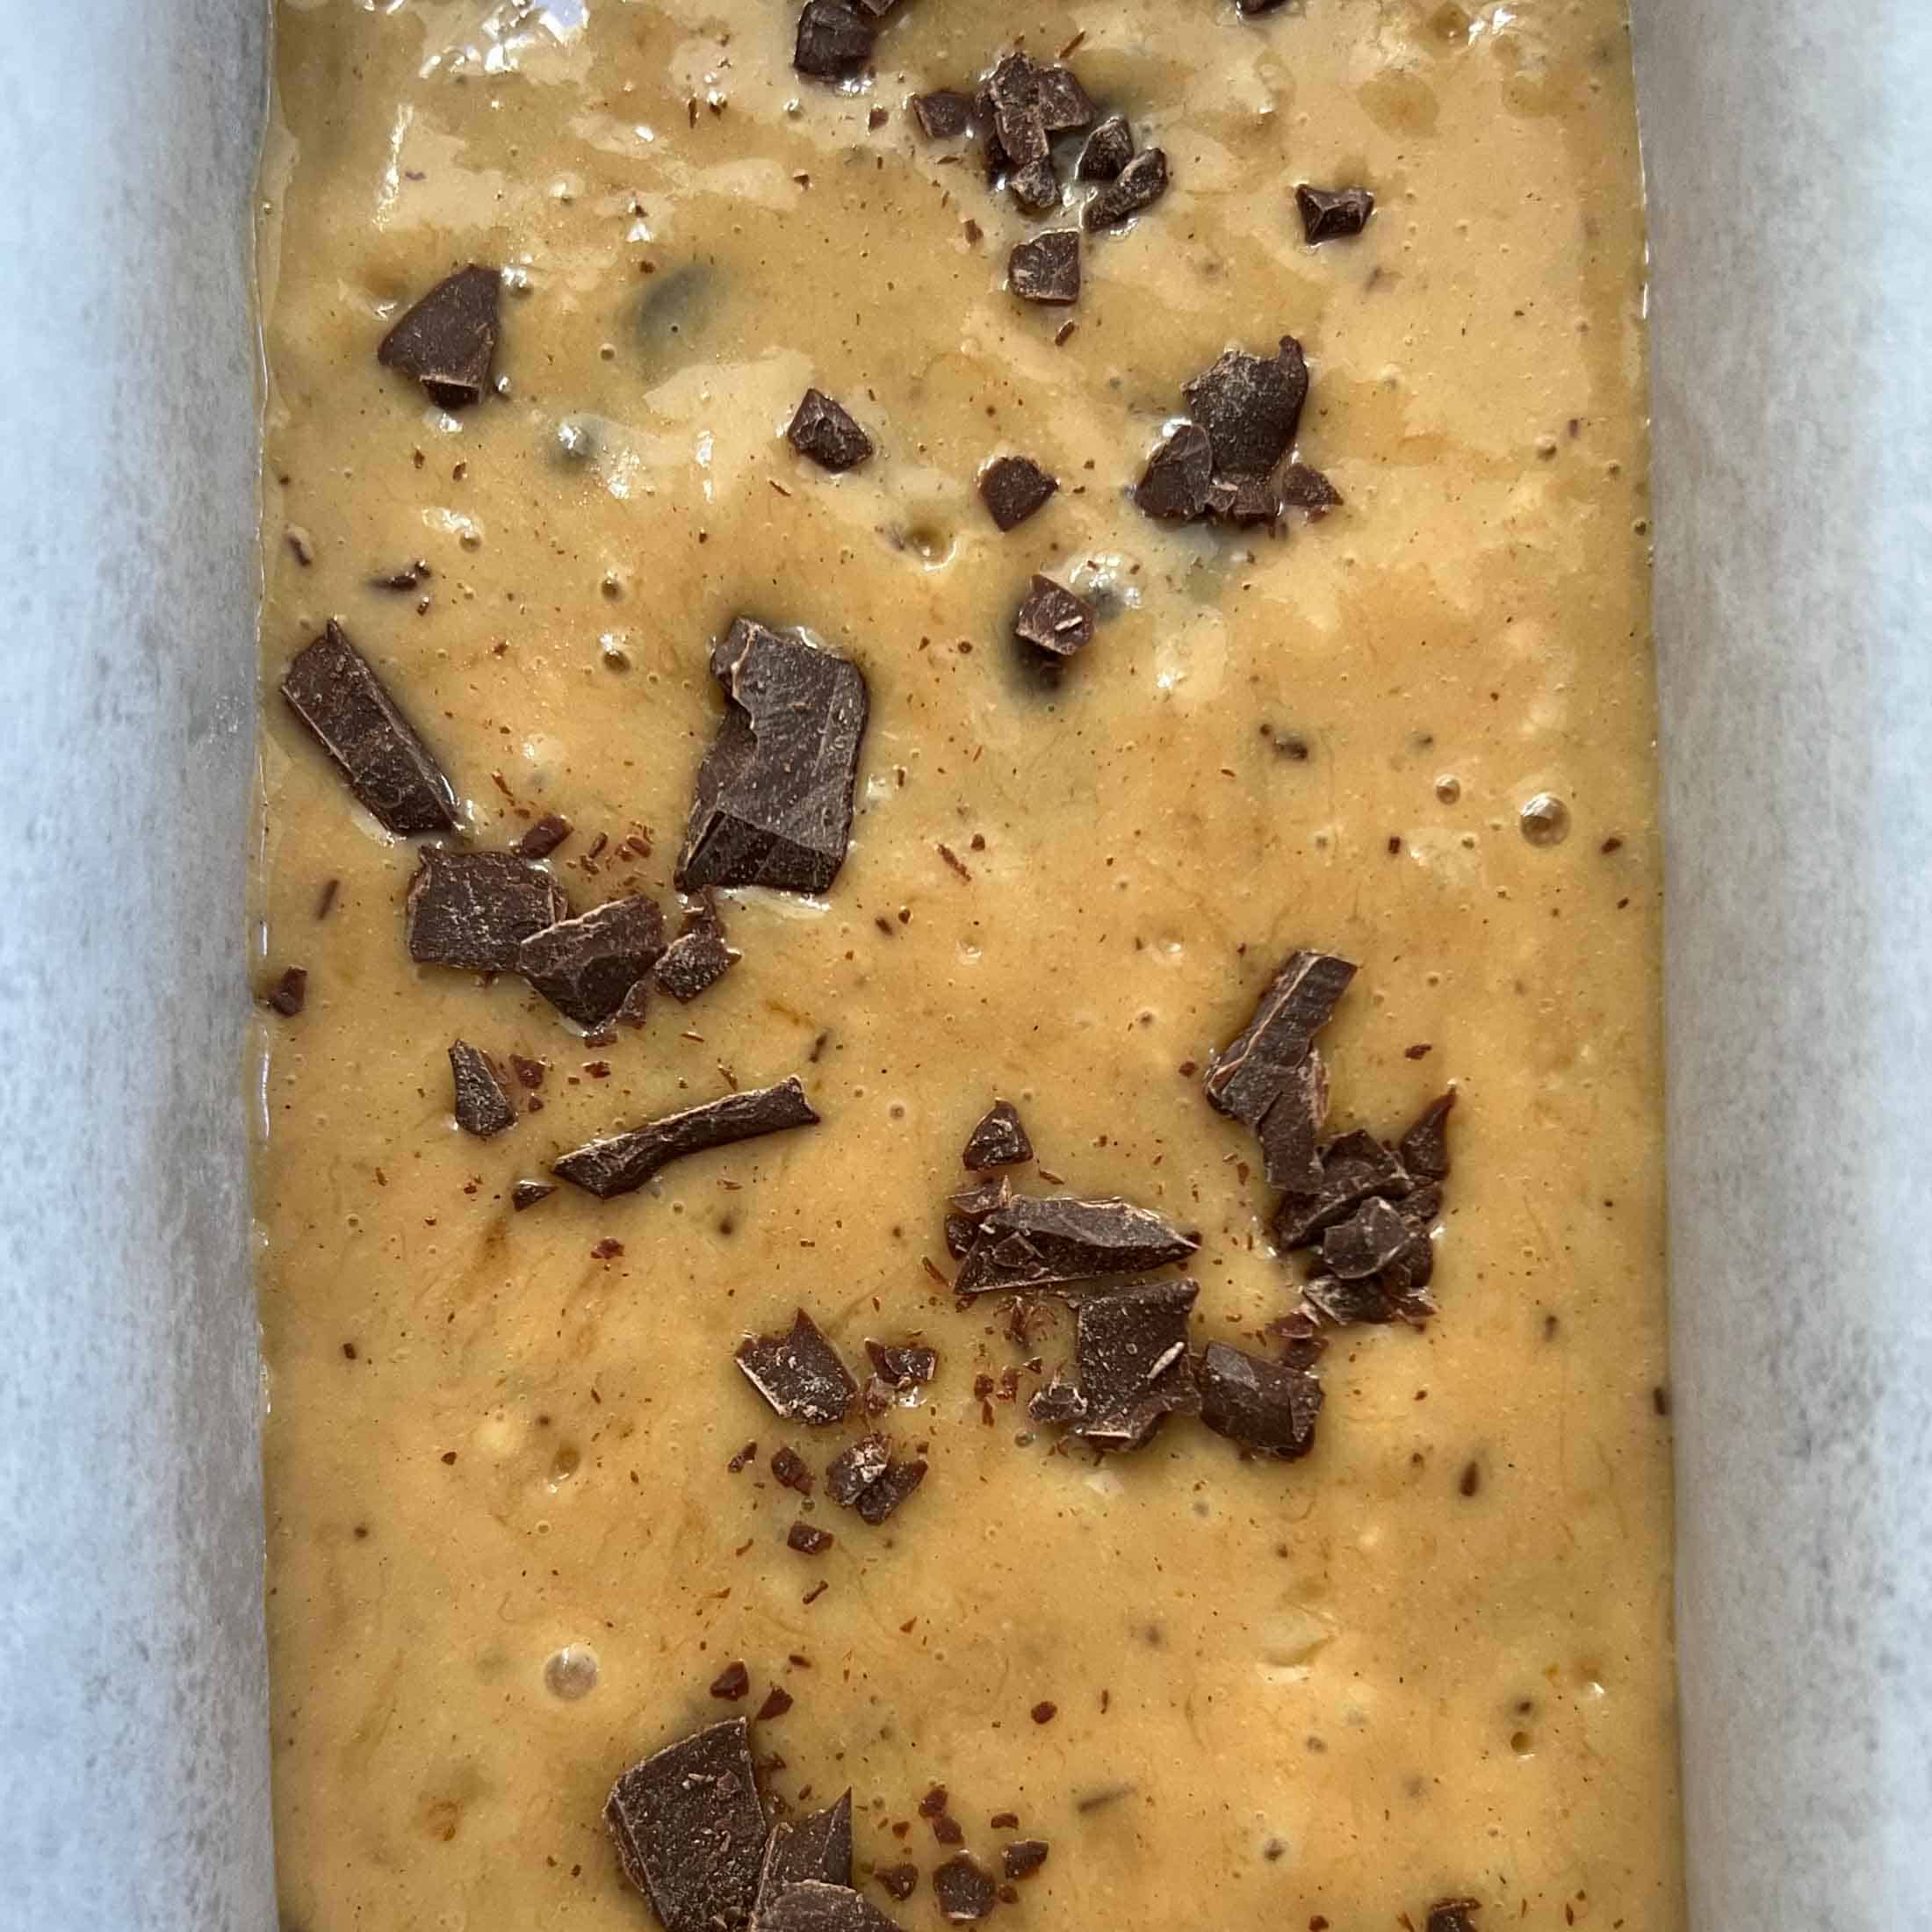 Chunks of chocolate sprinkled over a raw banana loaf.